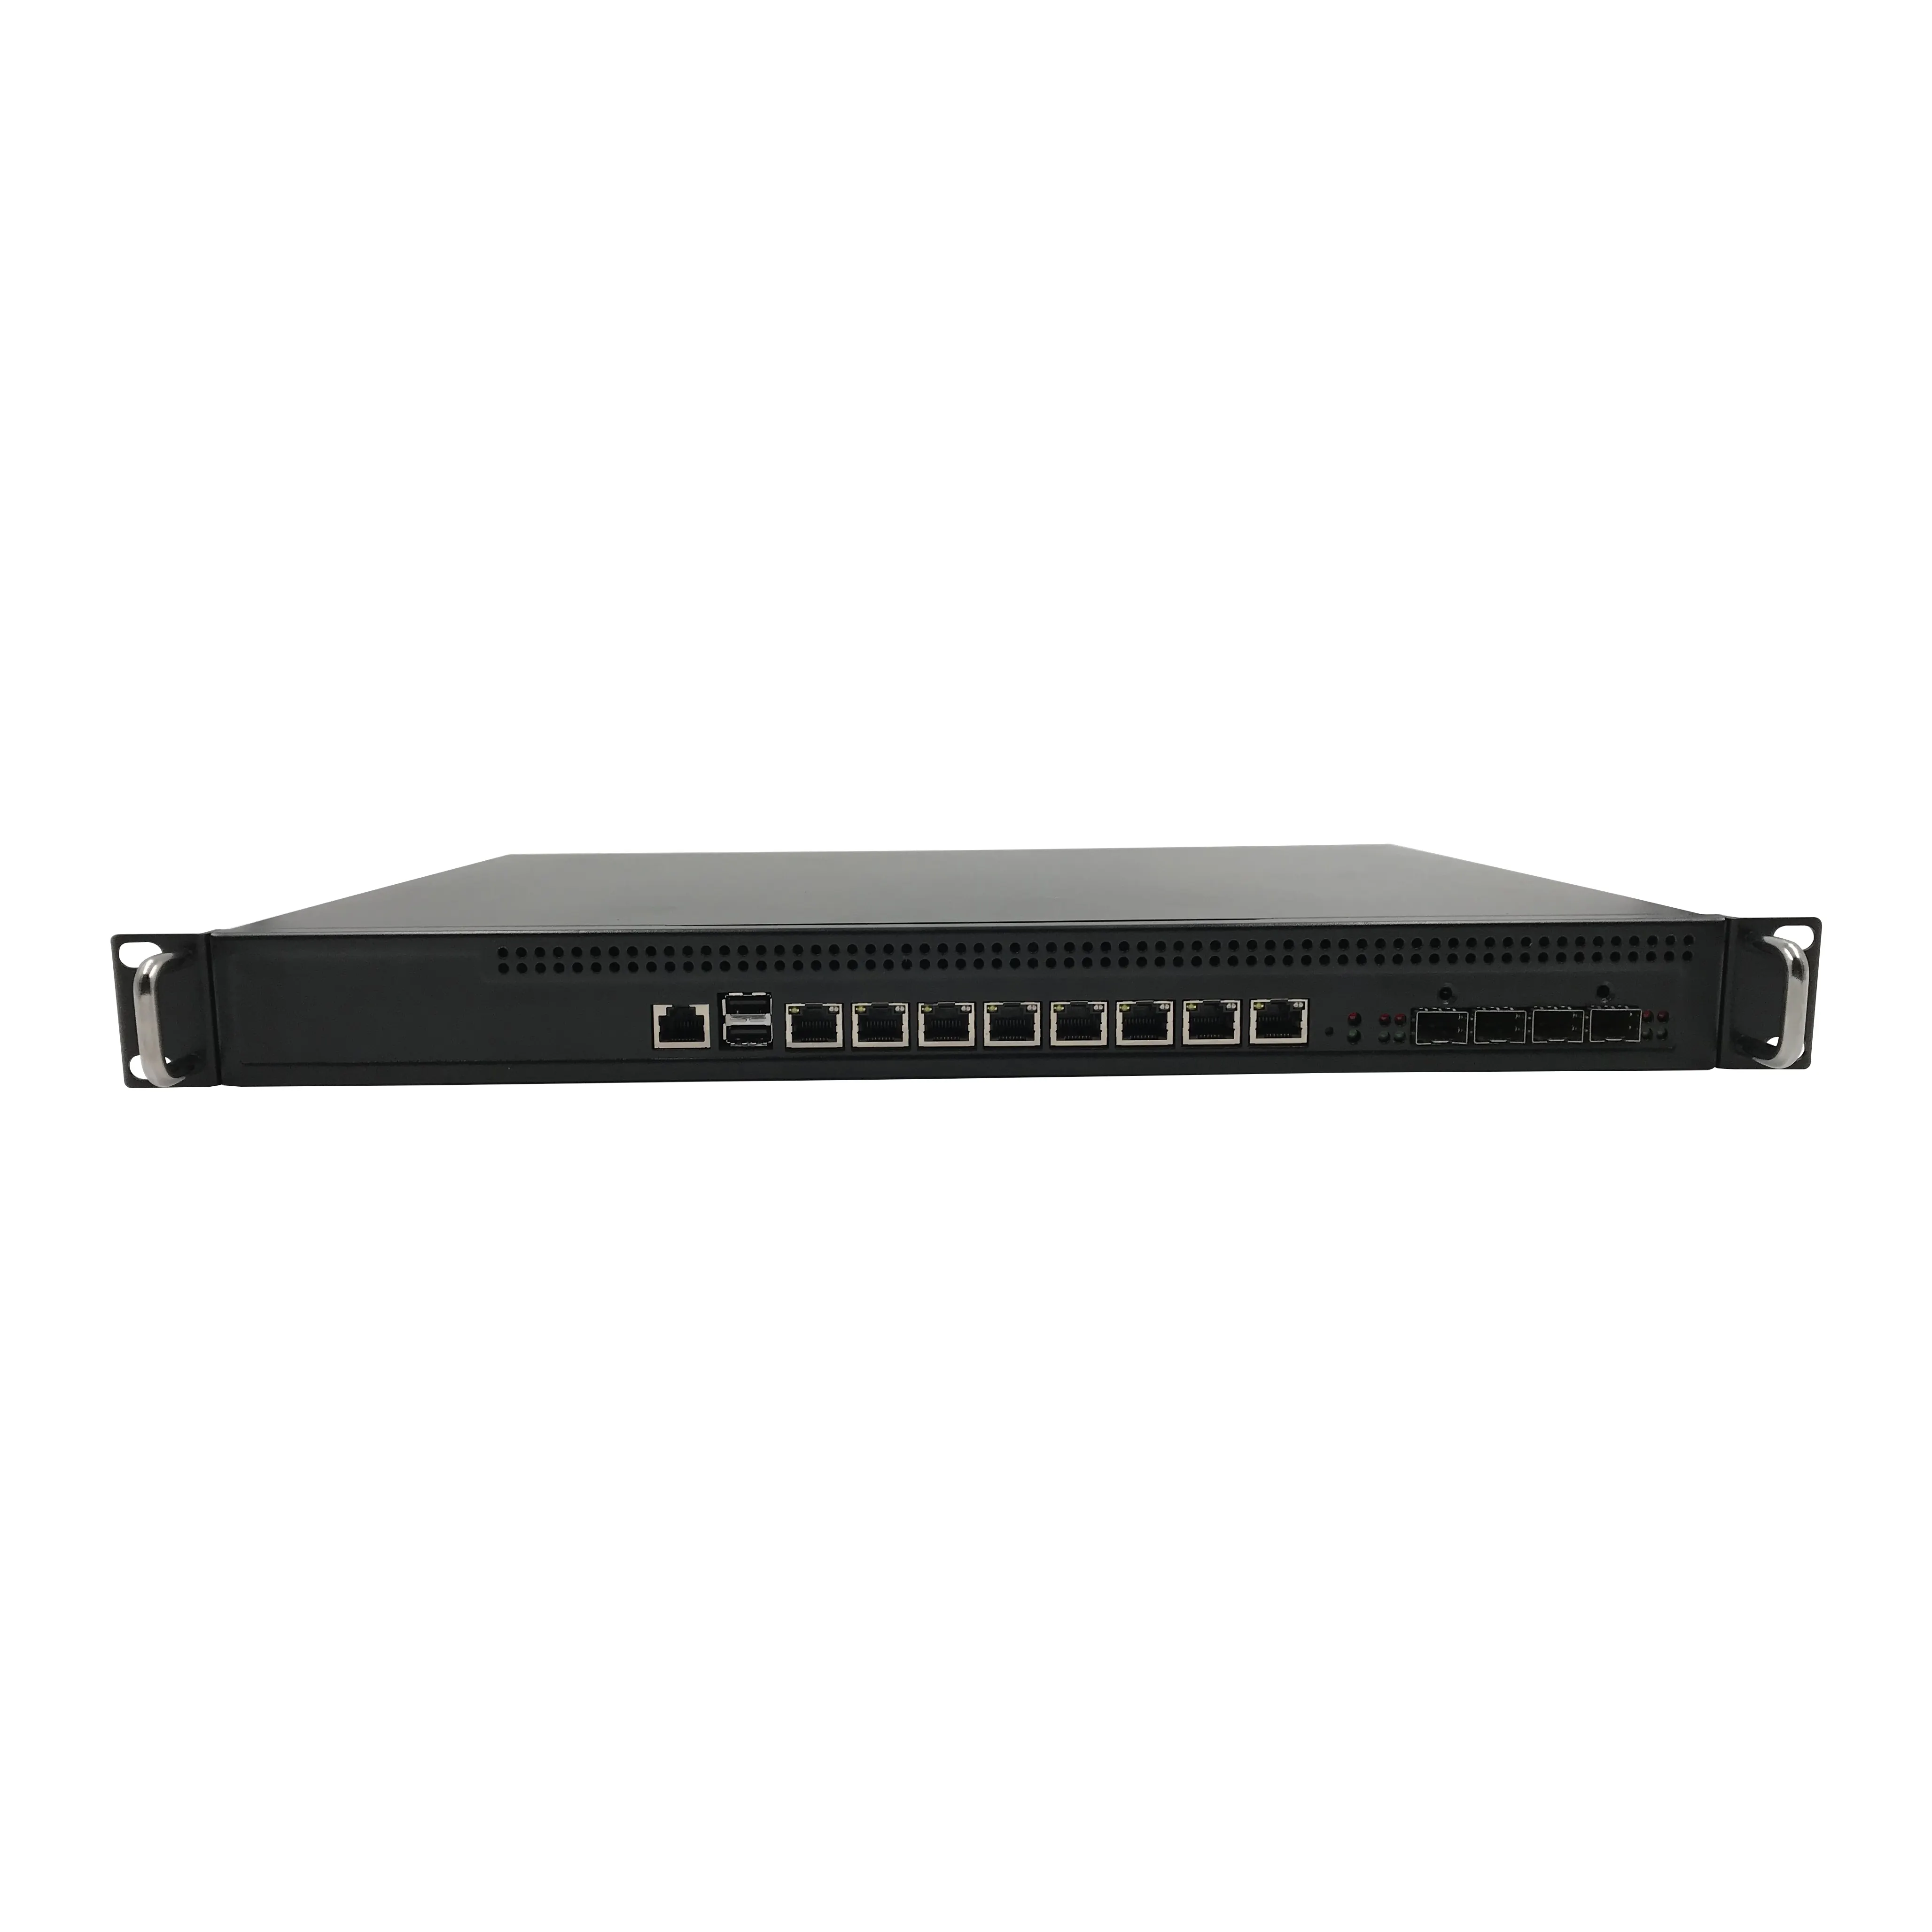 Intel H87 1U rackmount firewall chassis mini pc 16GB ddr RAM/4SFP ports/8 LAN/BYPASS